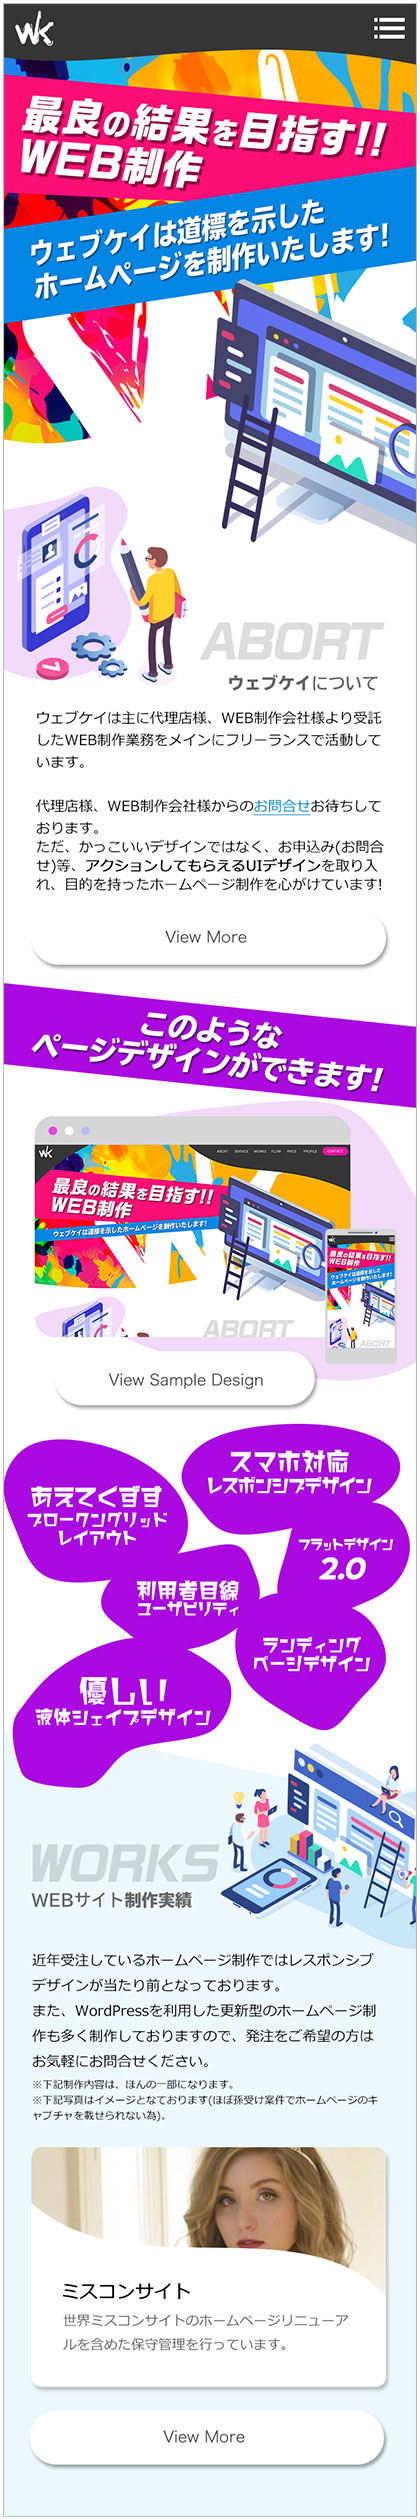 web DesignSample[sp]